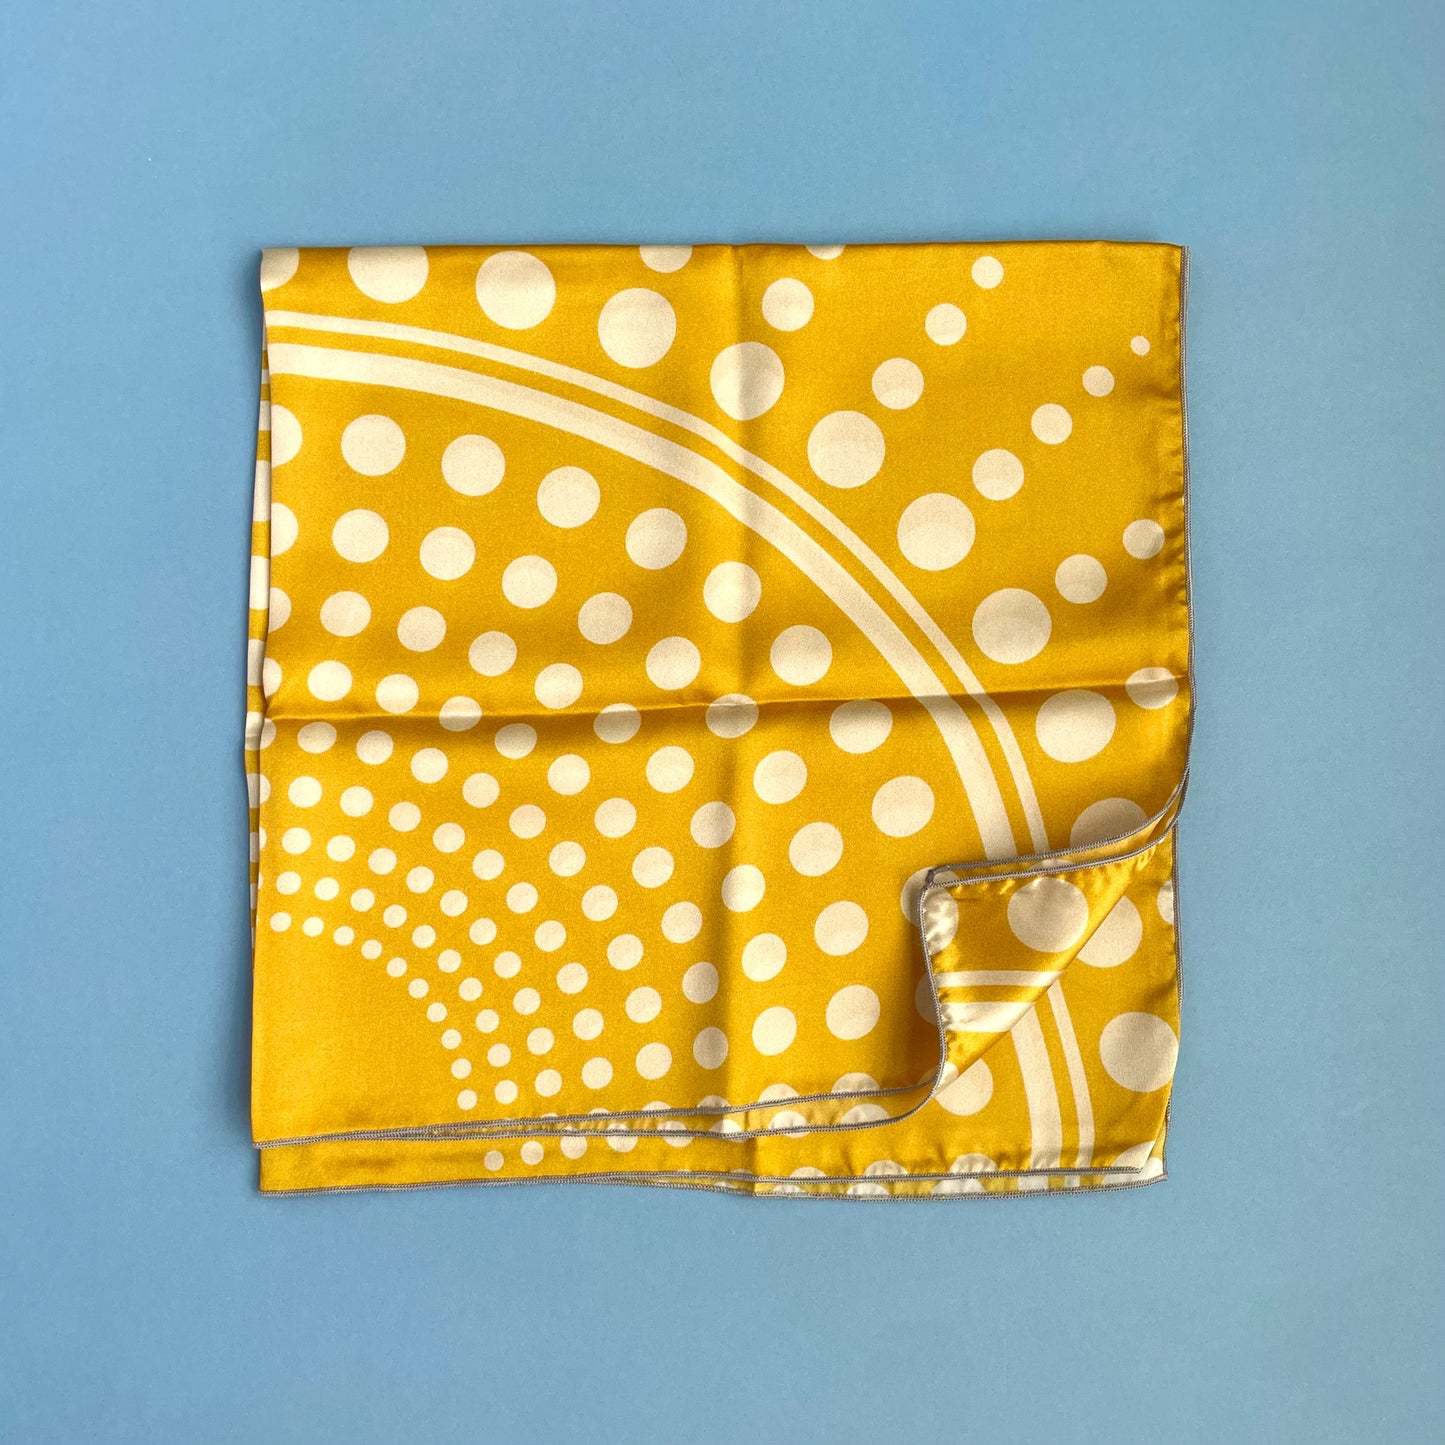 Vitamin D -  yellow square silk scarf with geometric polka dot pattern